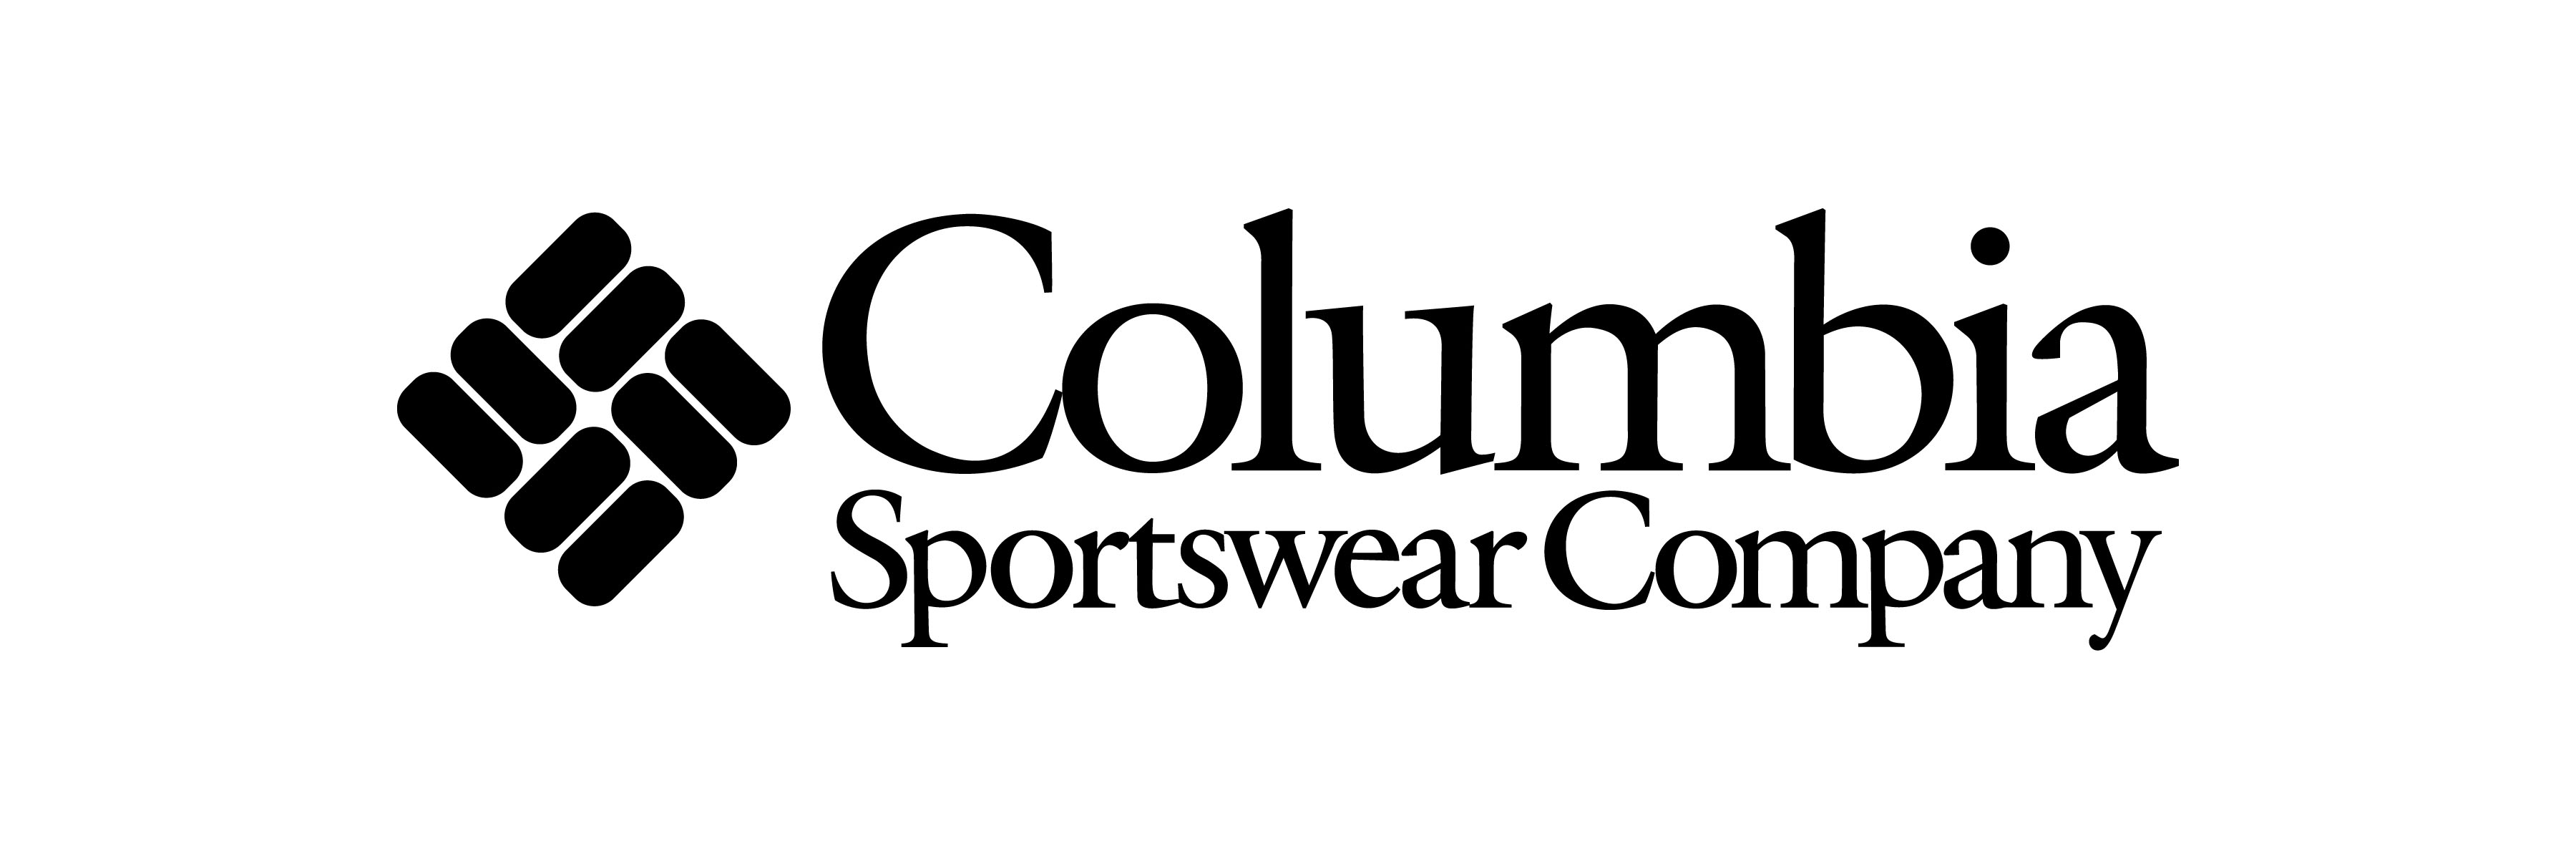 Columbia Sportswear activates Microsoft Cloud to ...